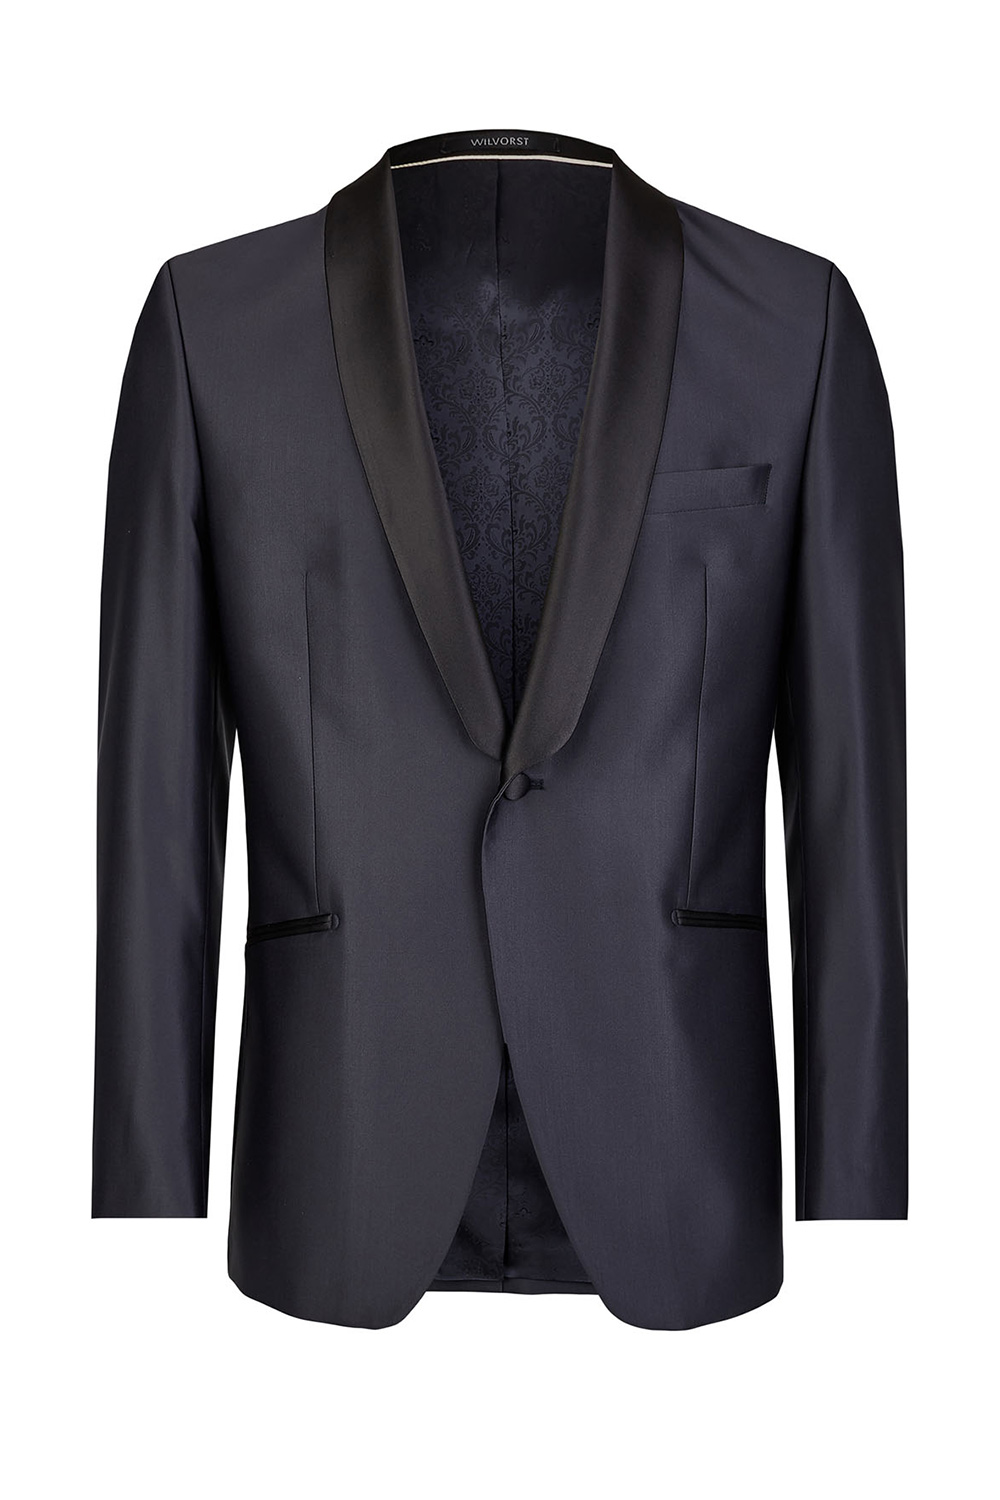 Black Sheen Slim Fit Tuxedo - Tom Murphy's Formal and Menswear